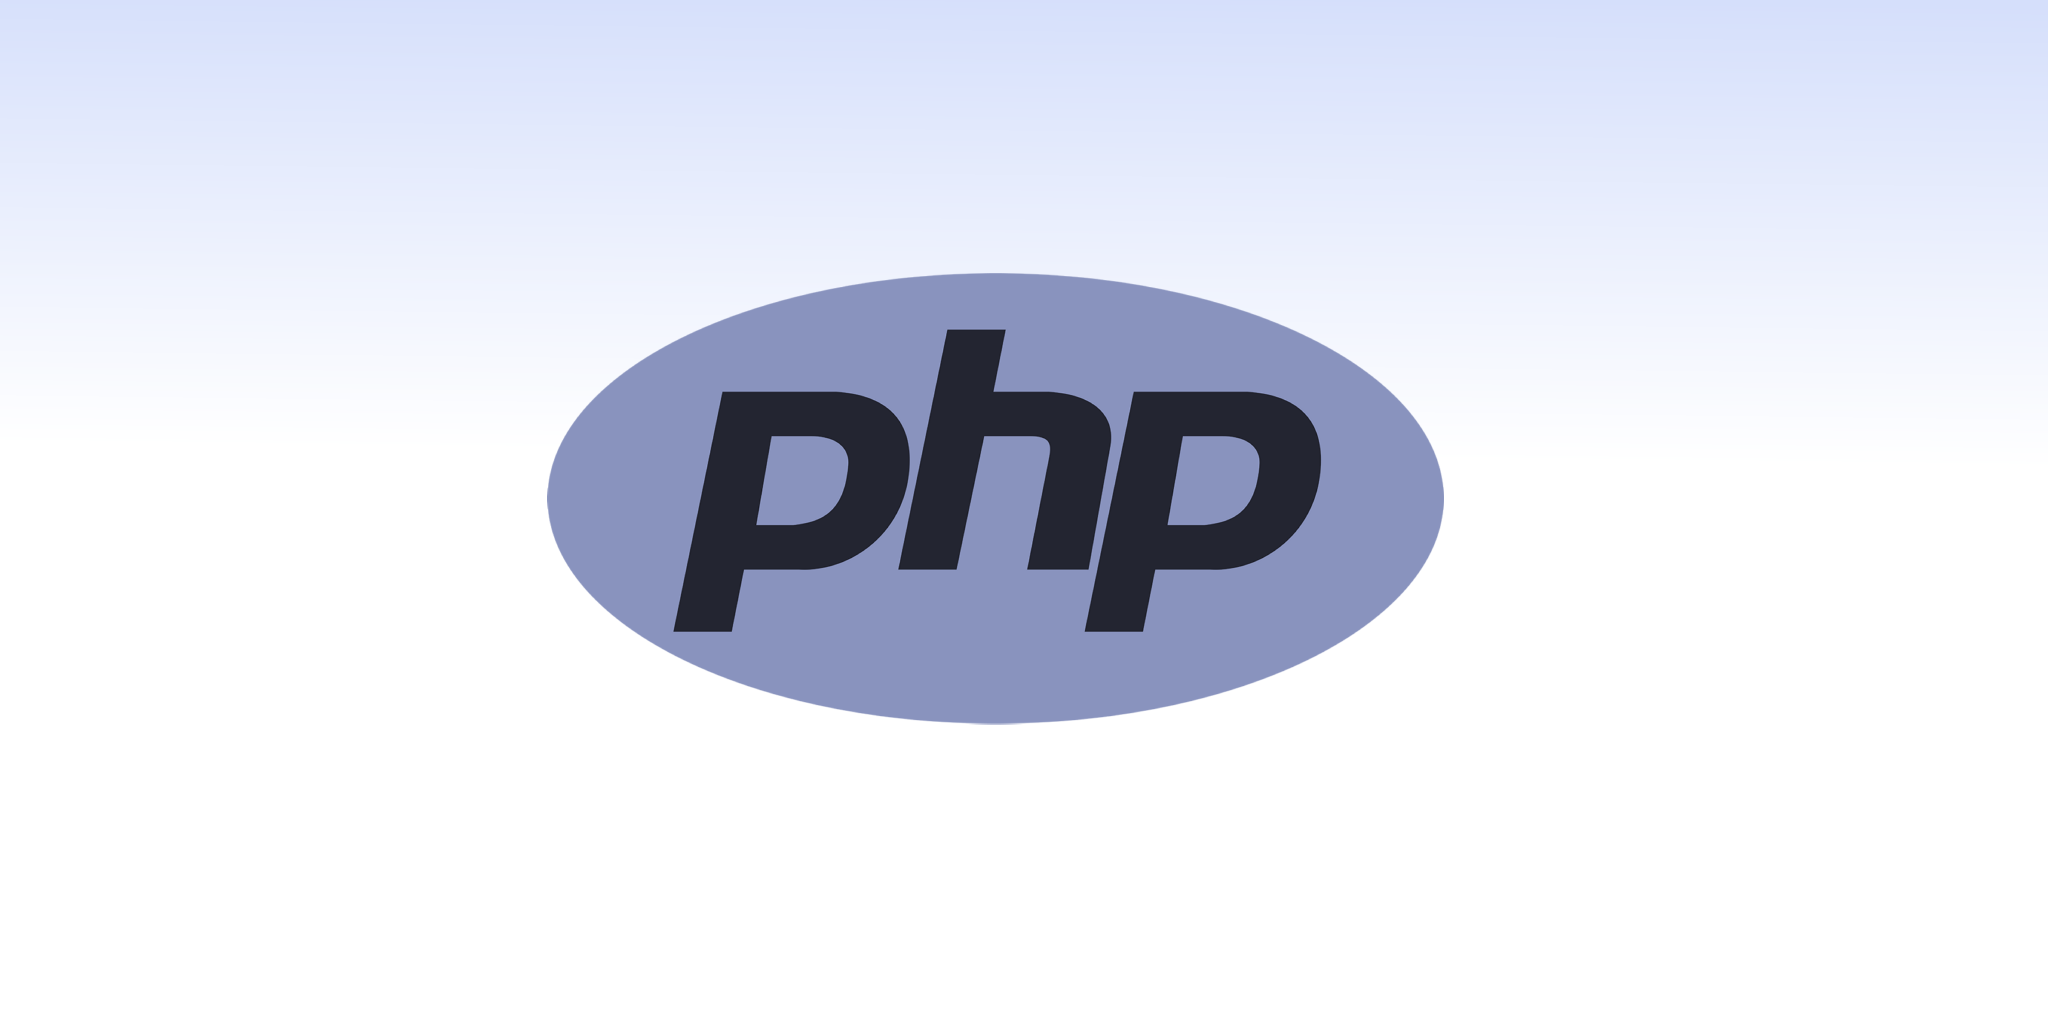 Php. Php логотип новый. Php logo PNG. Php Date. Php ссылка на сайт